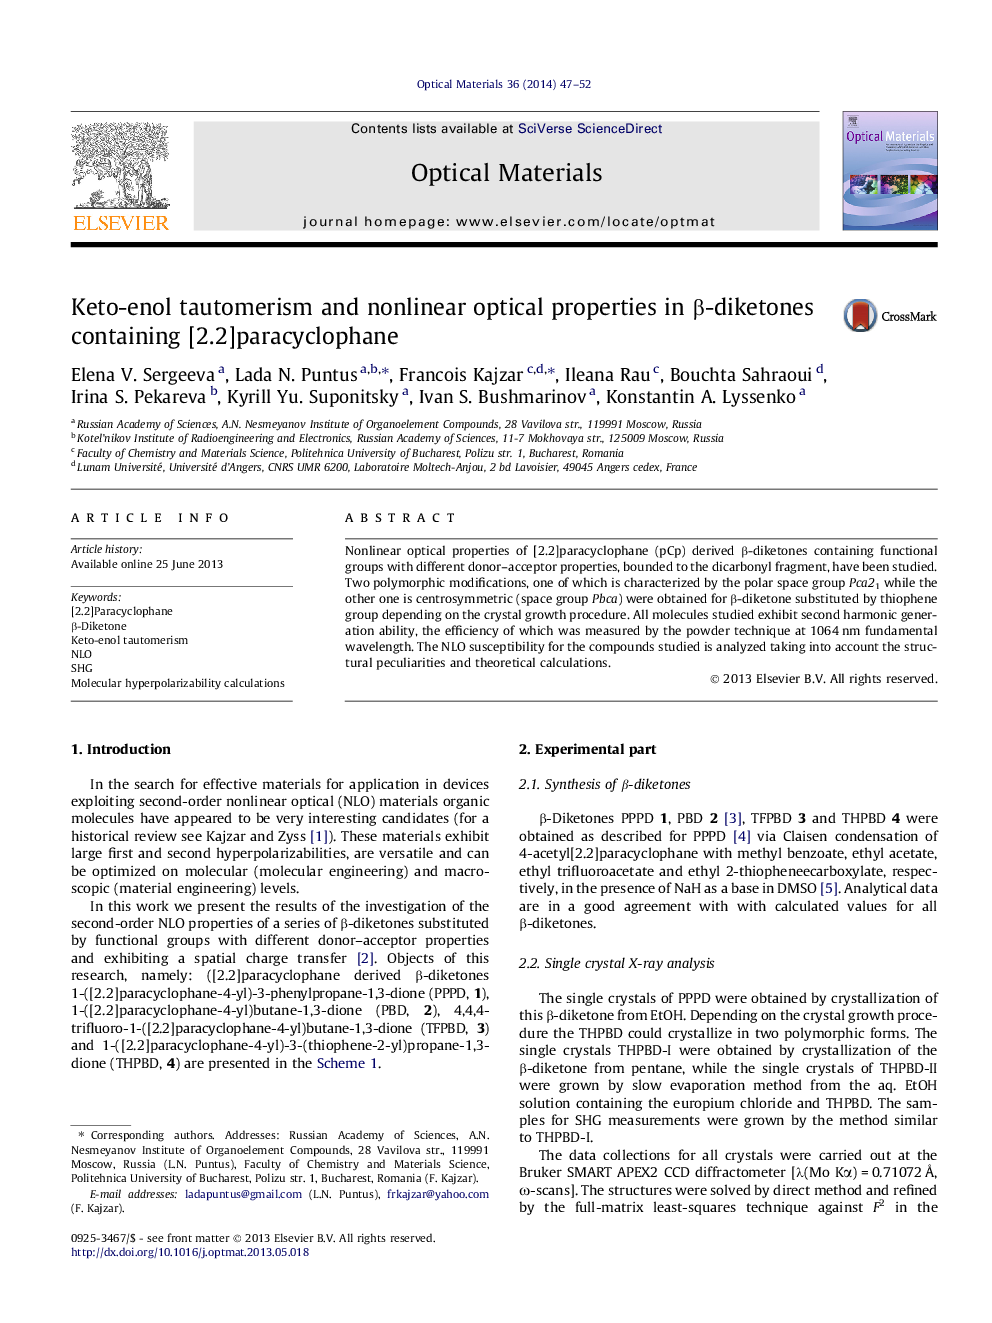 Keto-enol tautomerism and nonlinear optical properties in Î²-diketones containing [2.2]paracyclophane